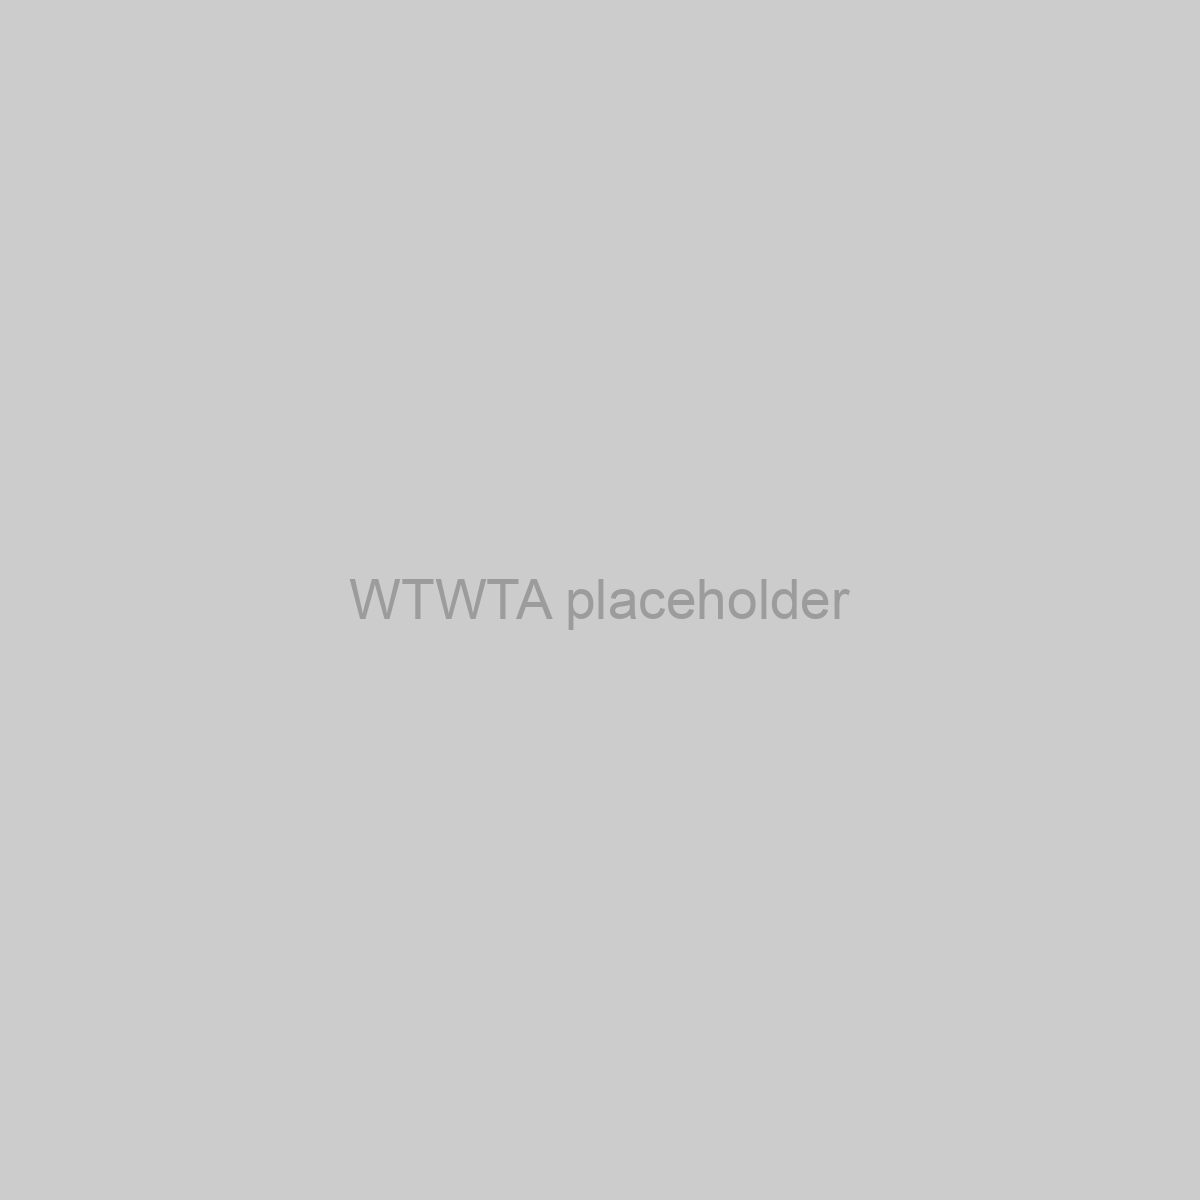 WTWTA Placeholder Image